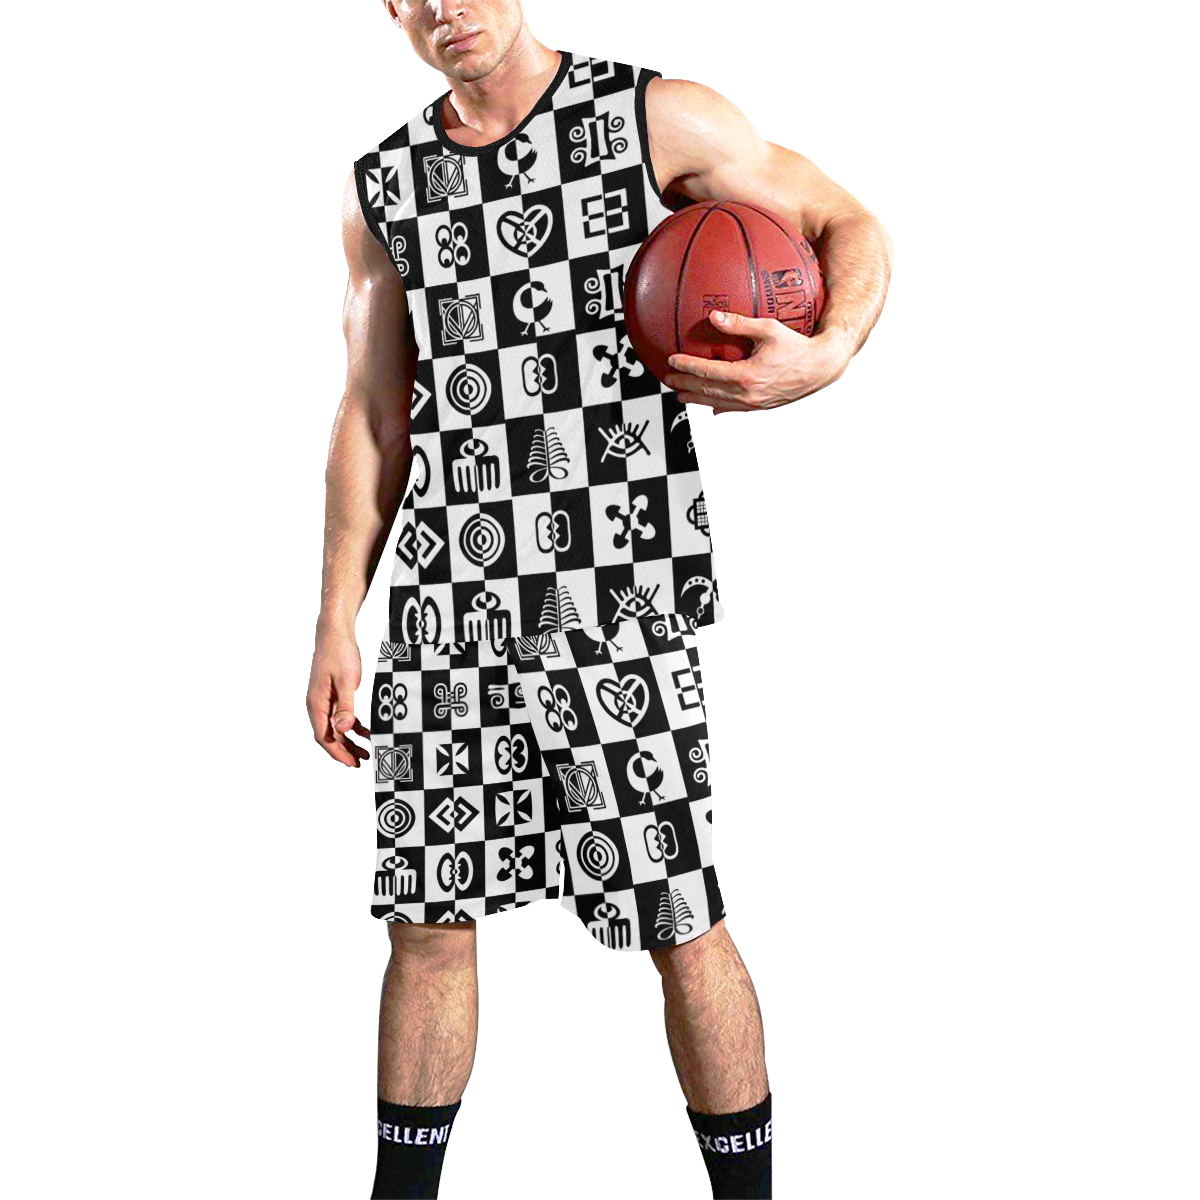 ADINKRA CHECKMATE All Over Print Basketball Uniform